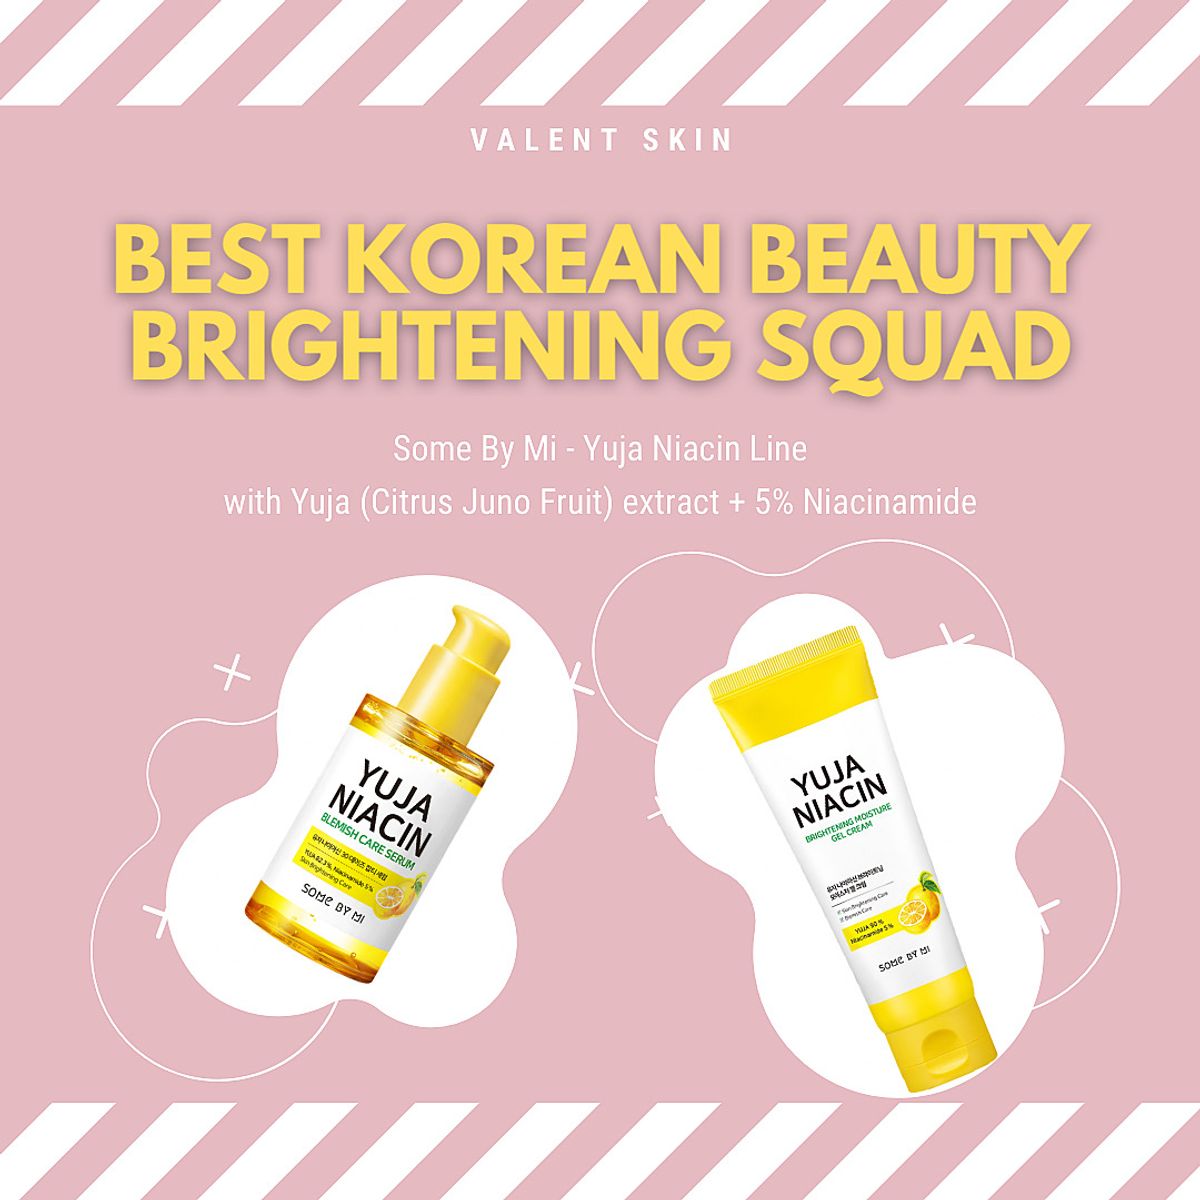 Best Korean Beauty Brightening Squad